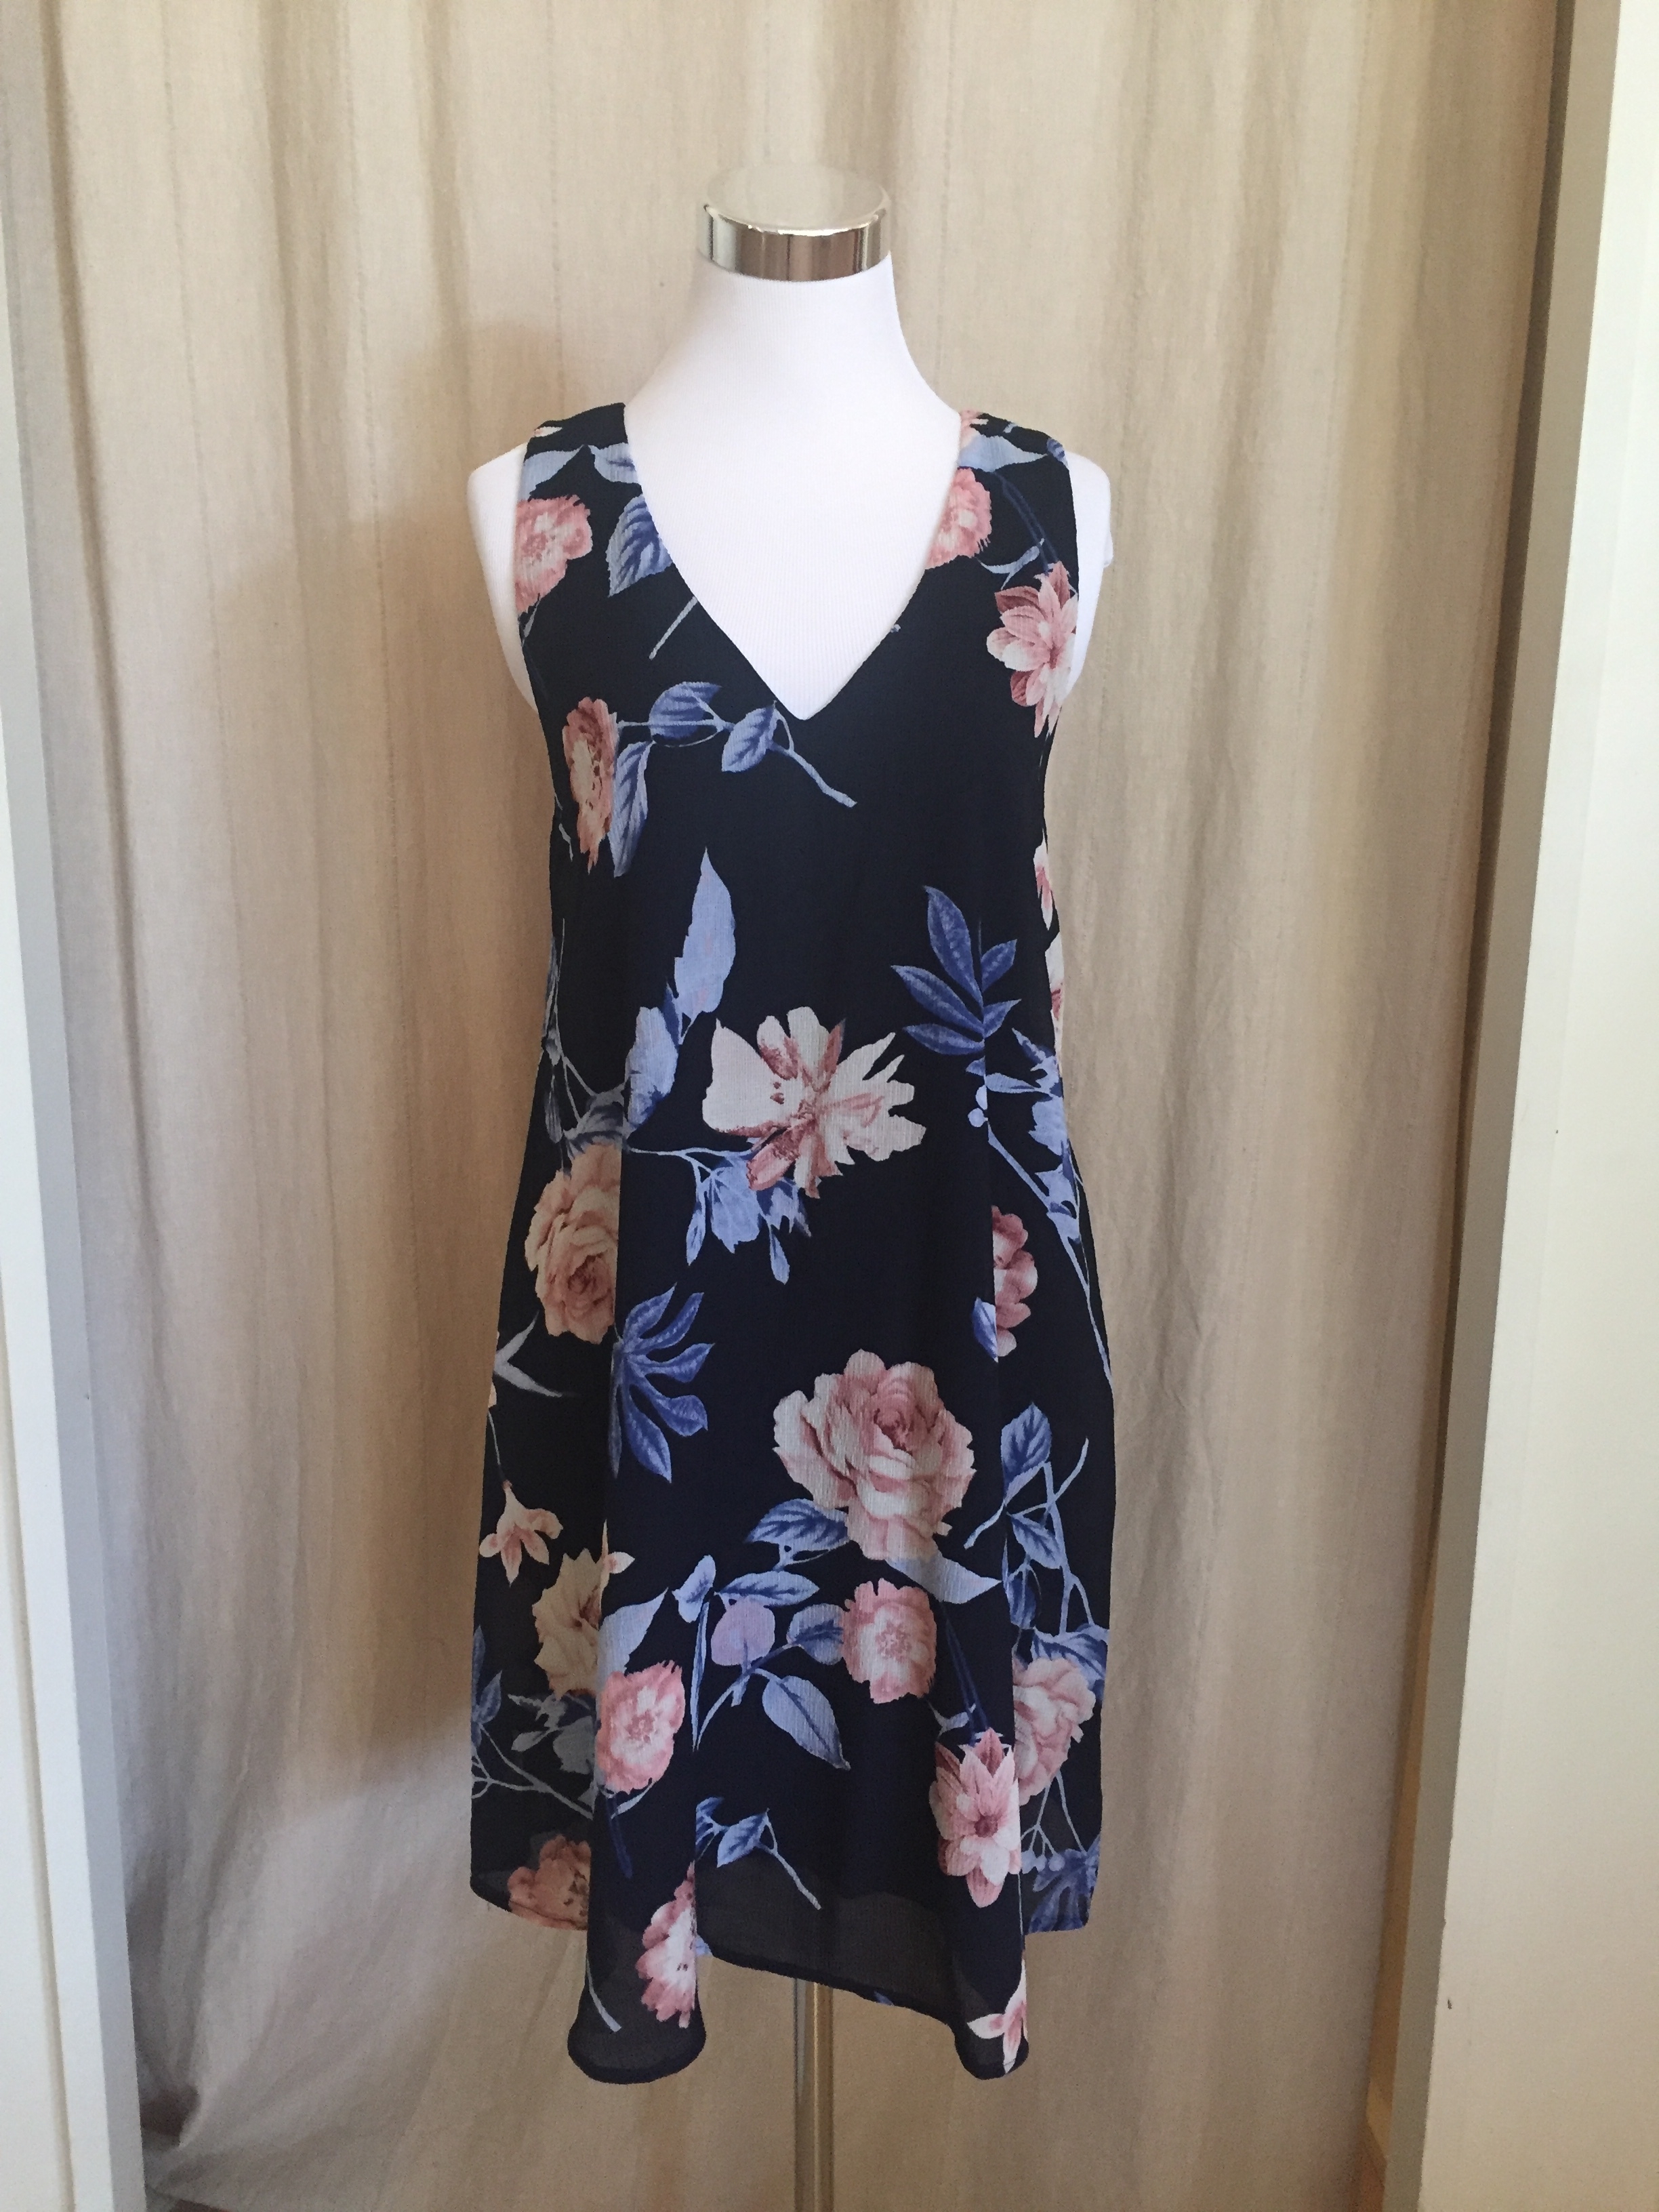 Strappy Back Floral Dress, $45